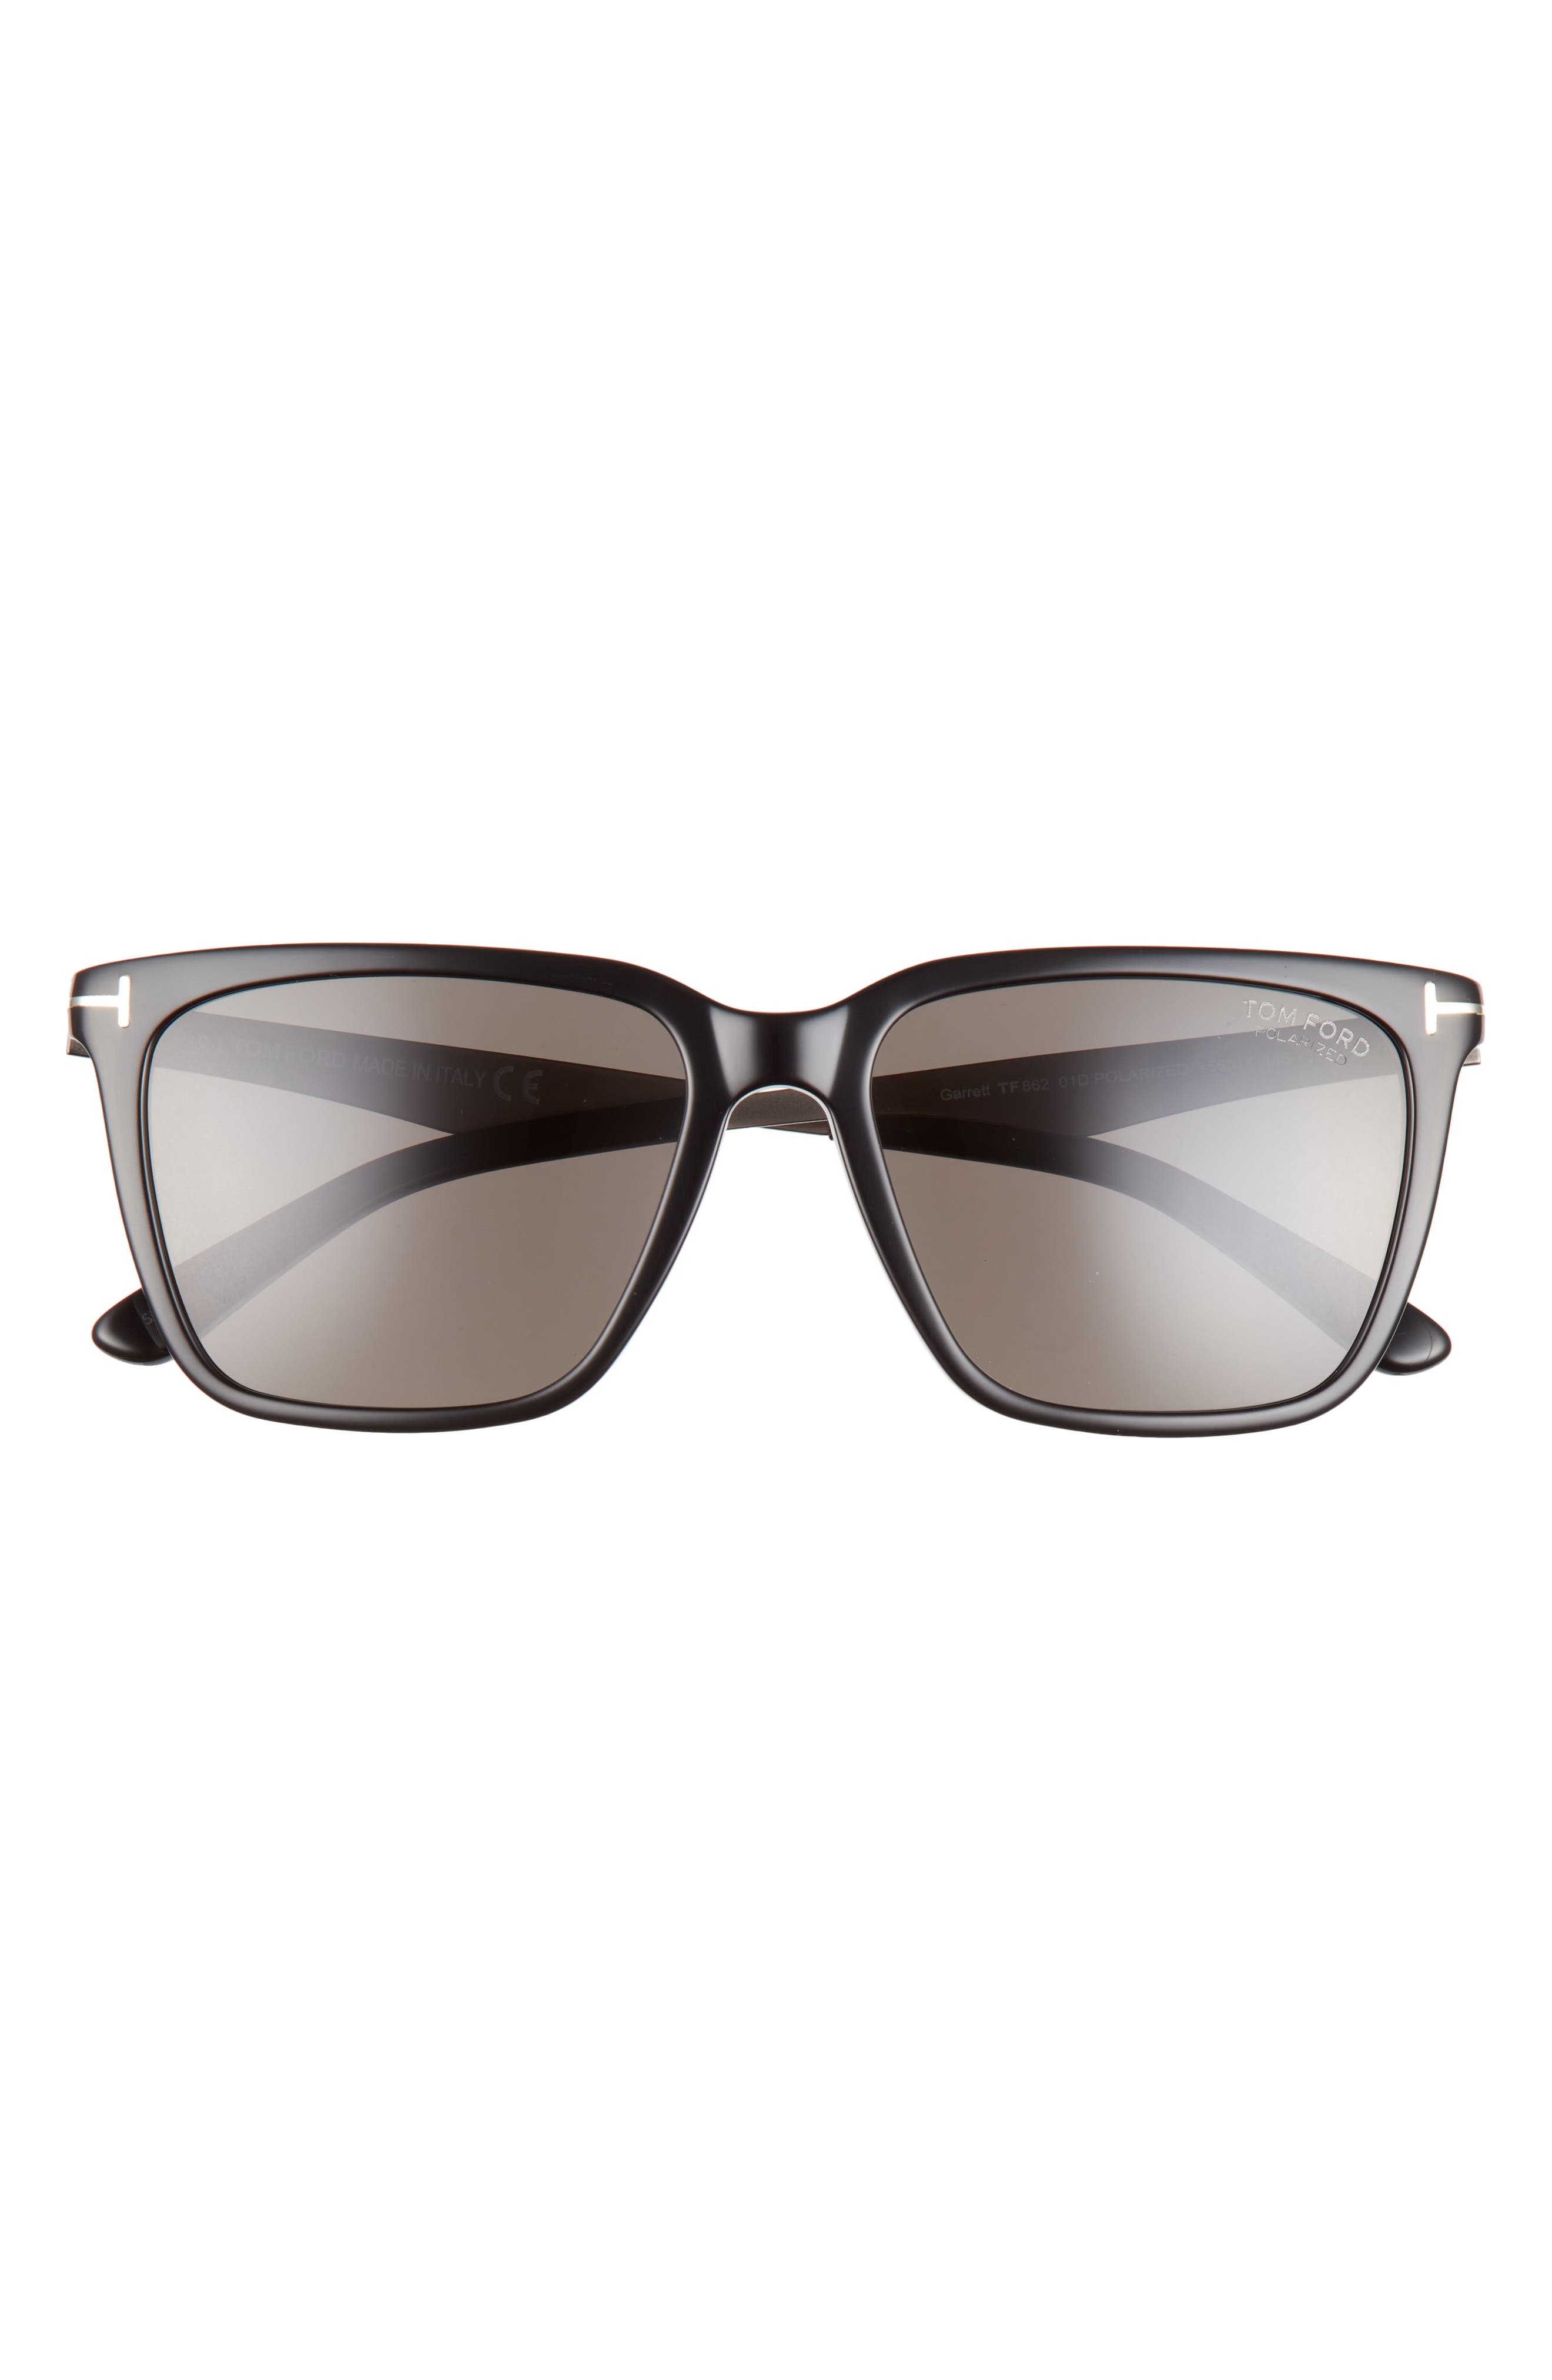 Tom Ford Garrett 56mm Polarized Square Sunglasses in Shiny Black /Smoke Polarized